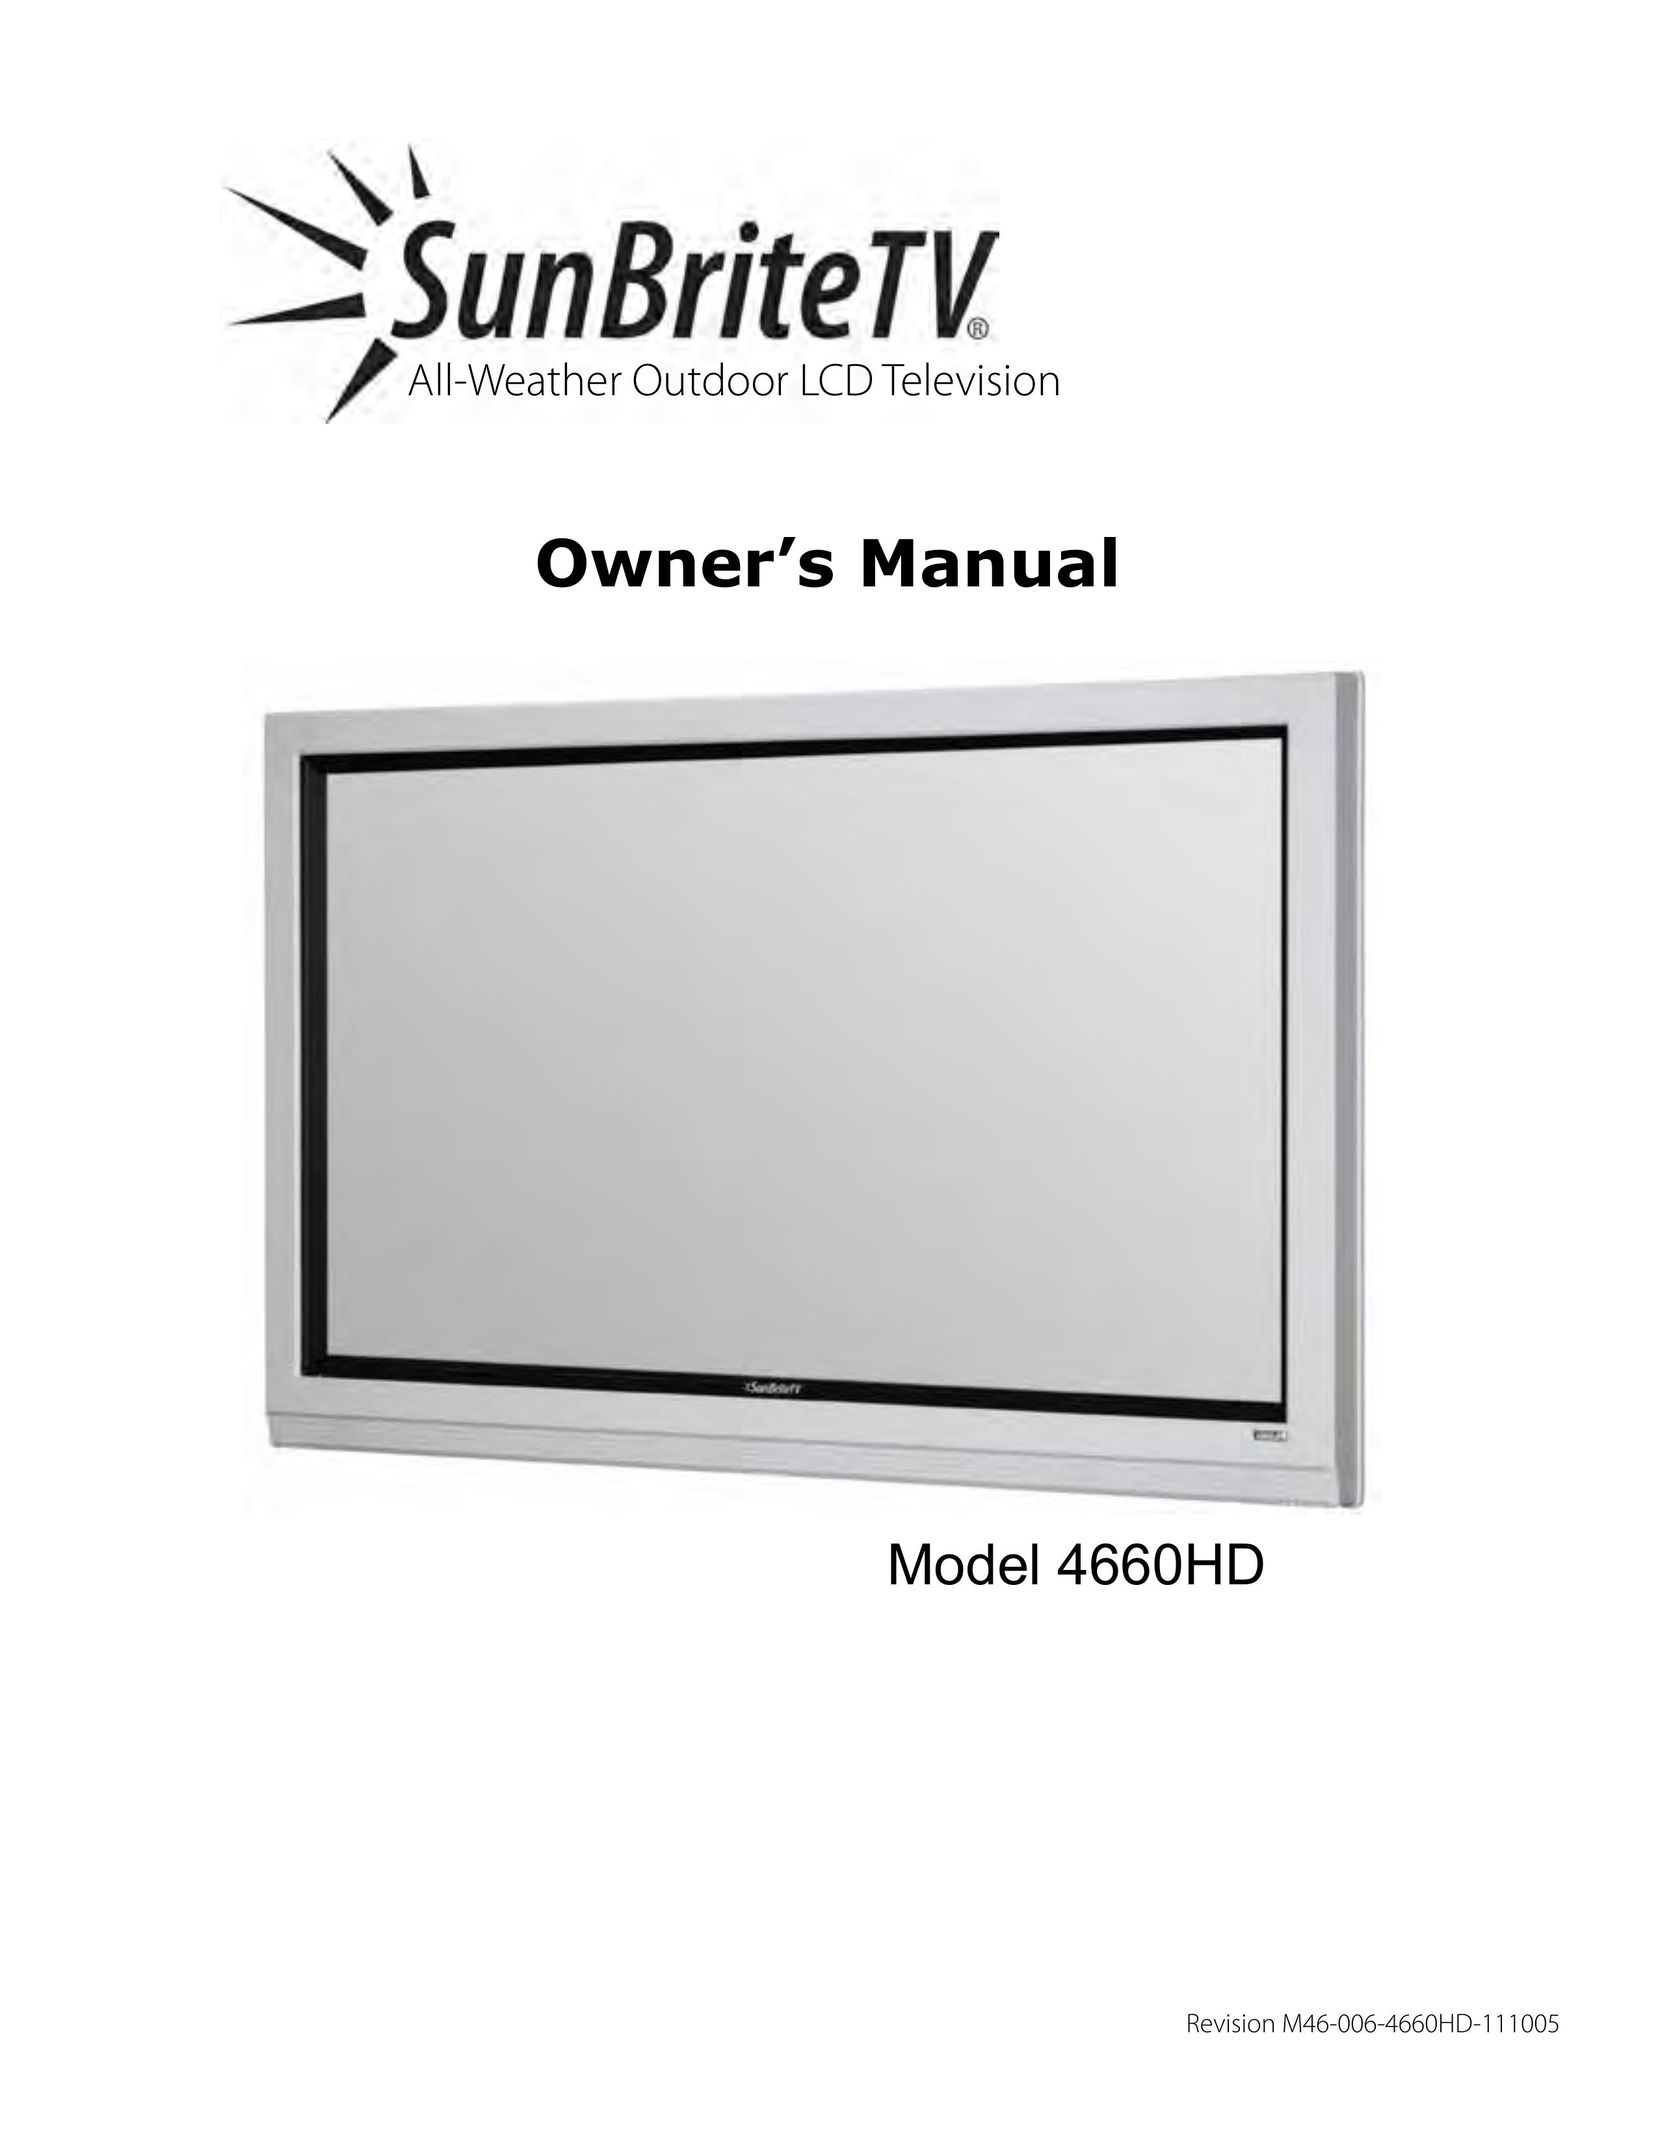 SunBriteTV SB-4660HD-SL Flat Panel Television User Manual